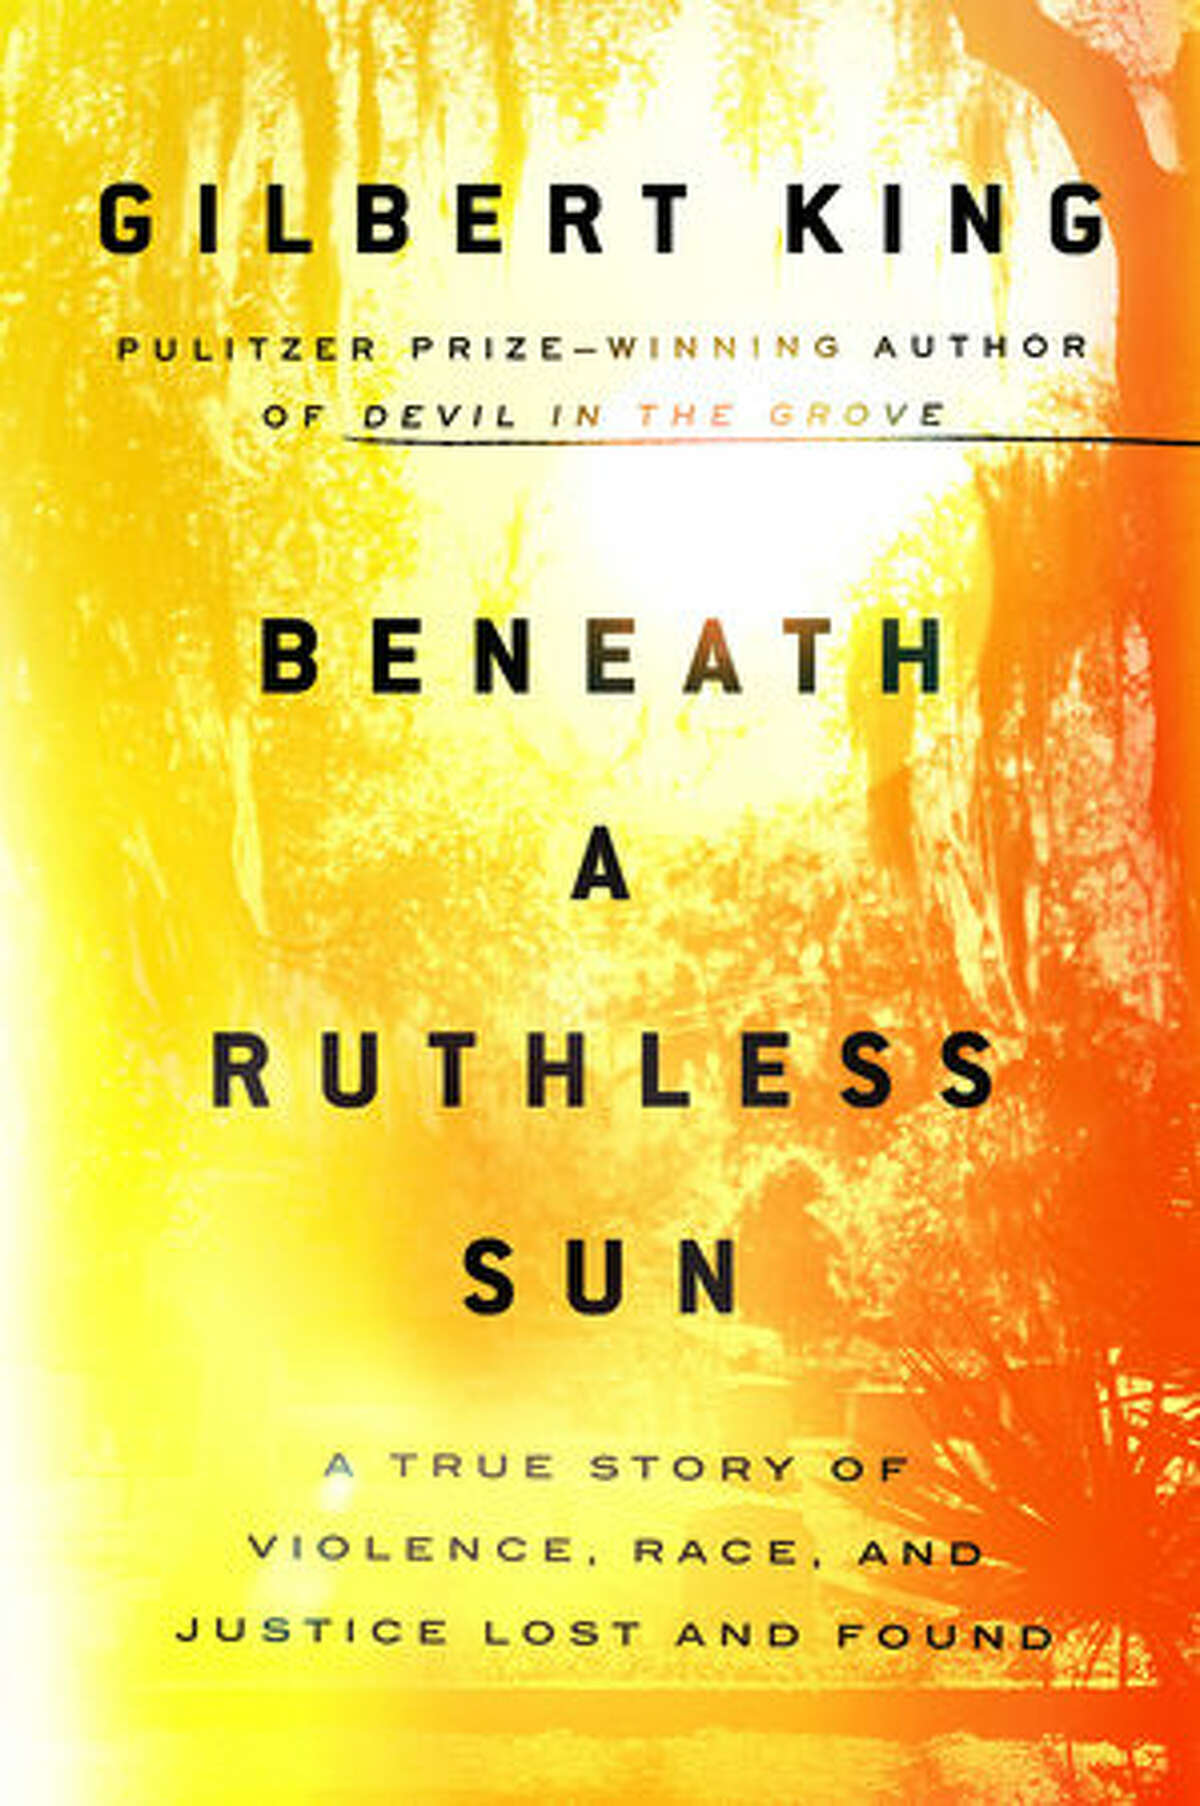 "Beneath a Ruthless Sun" by Gilbert King. (Penguin Random House)